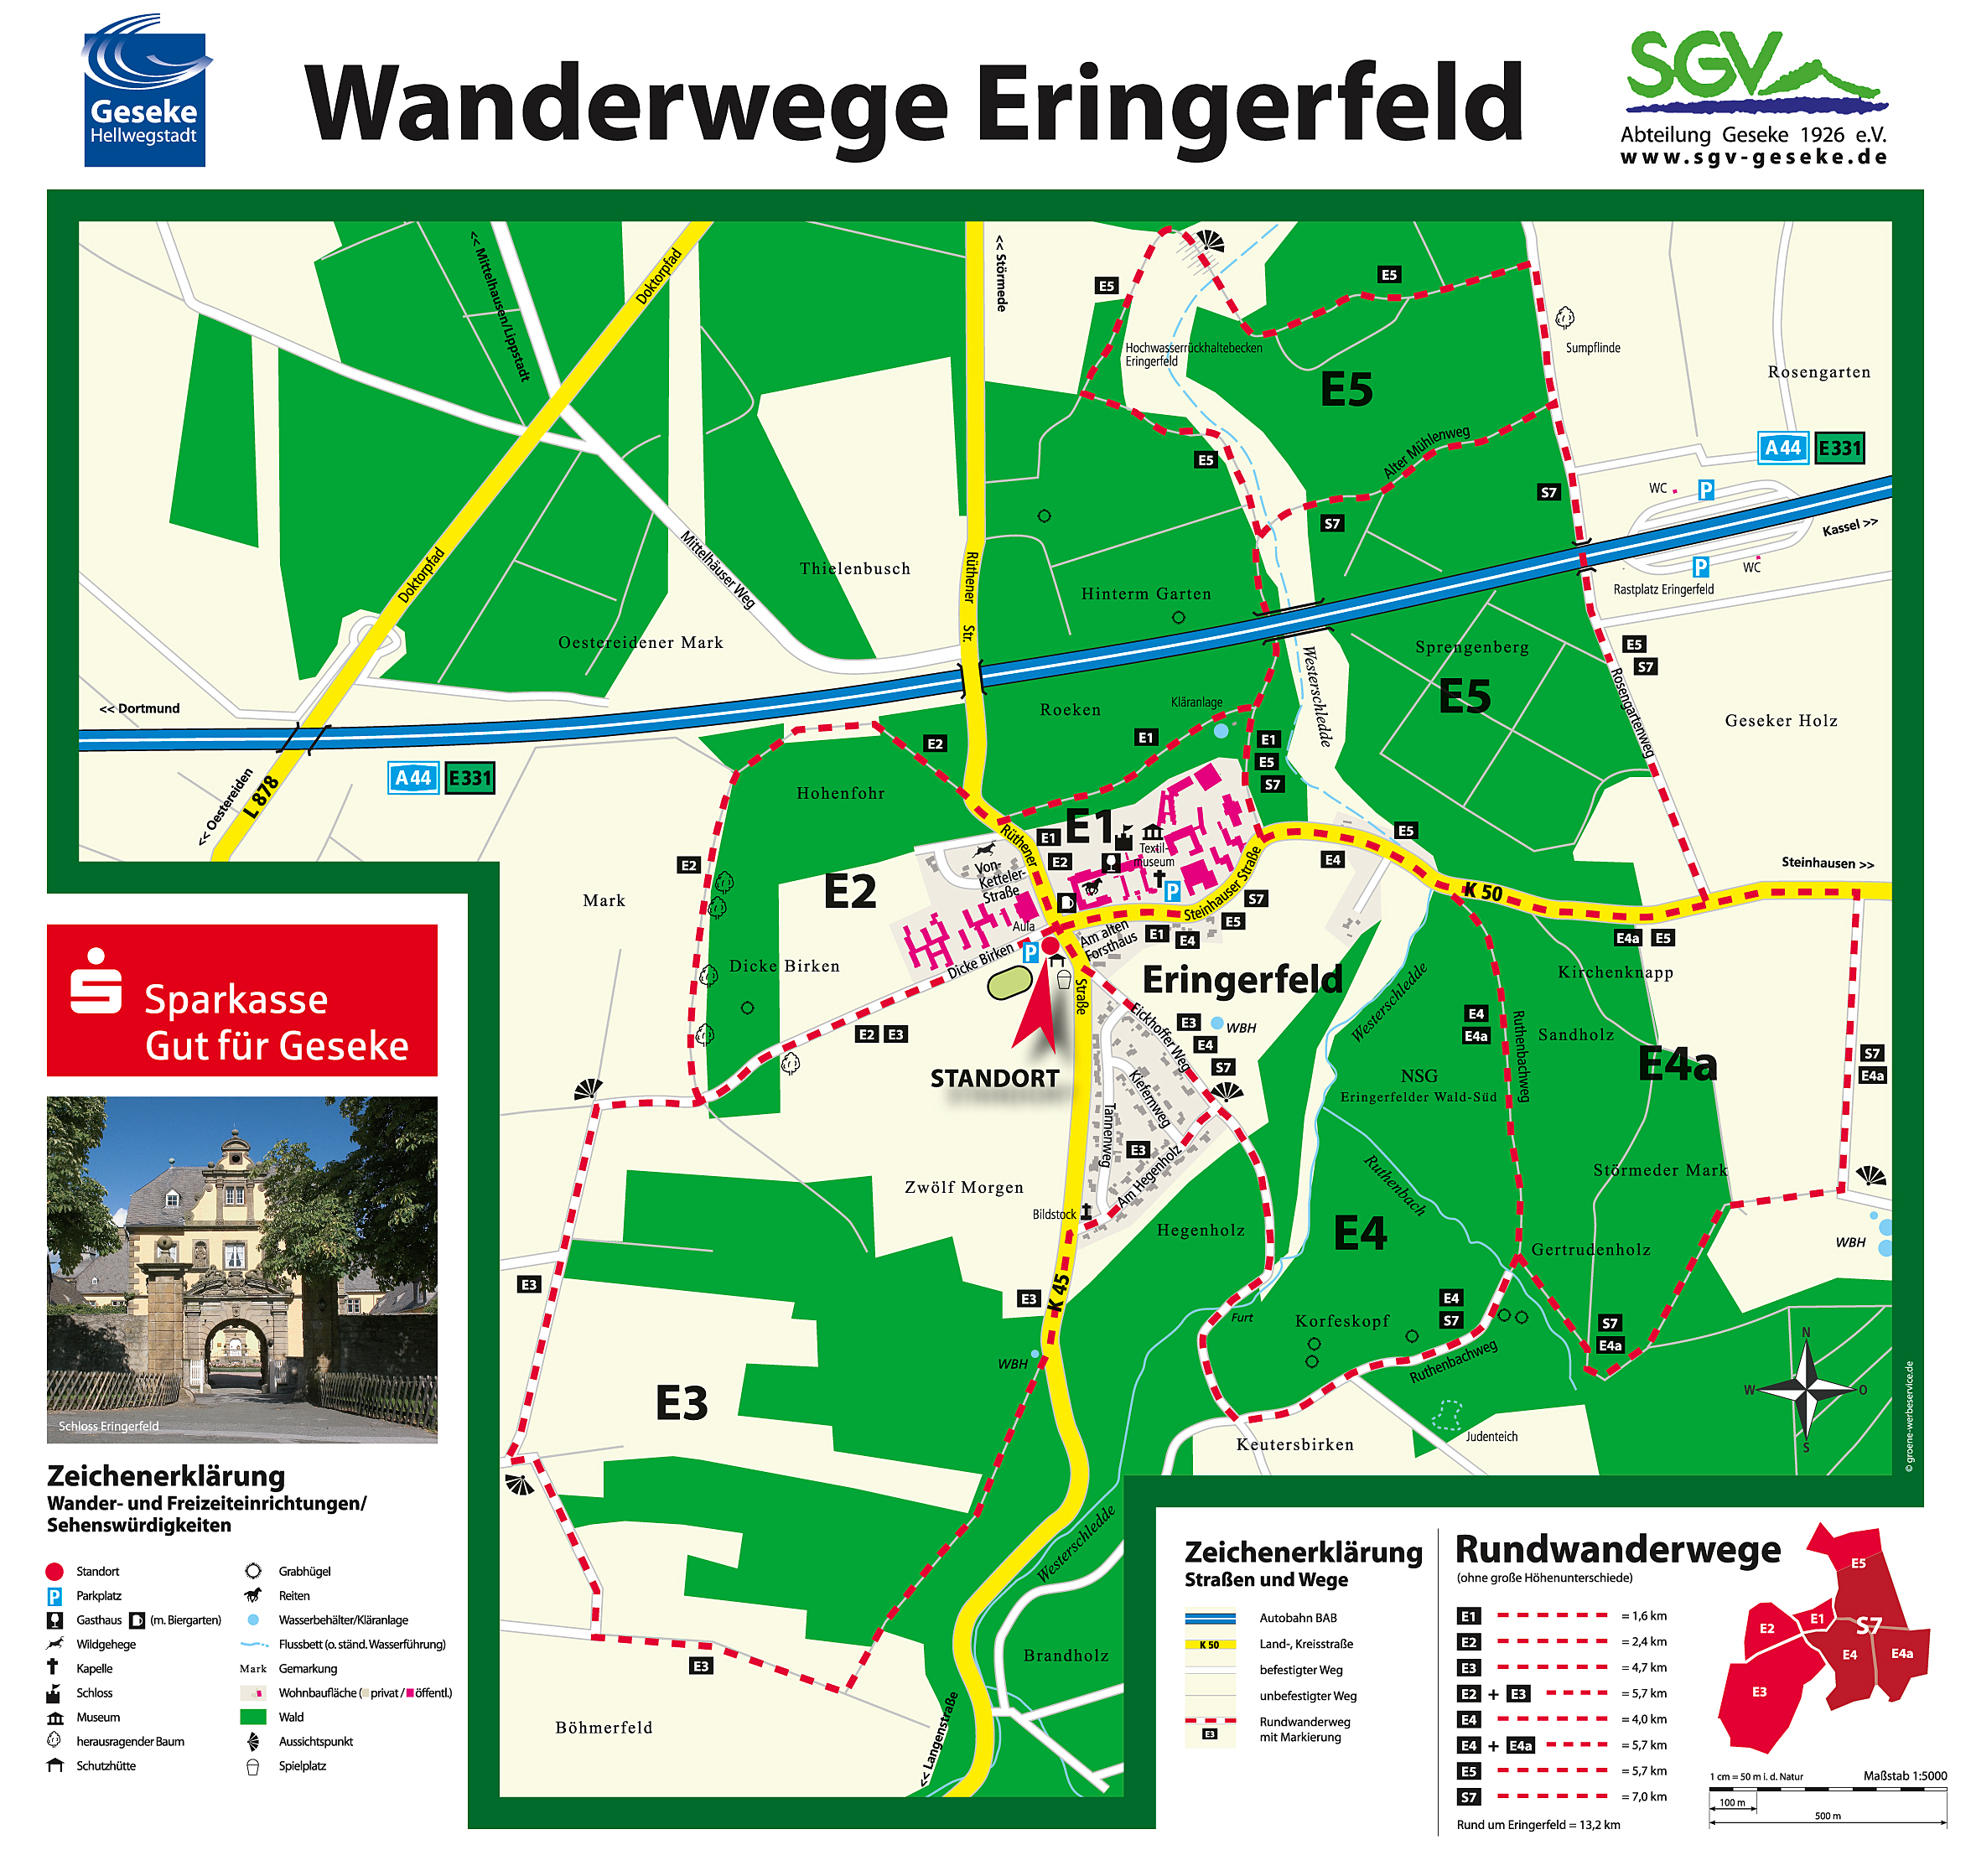 Wanderwege Eringerfeld